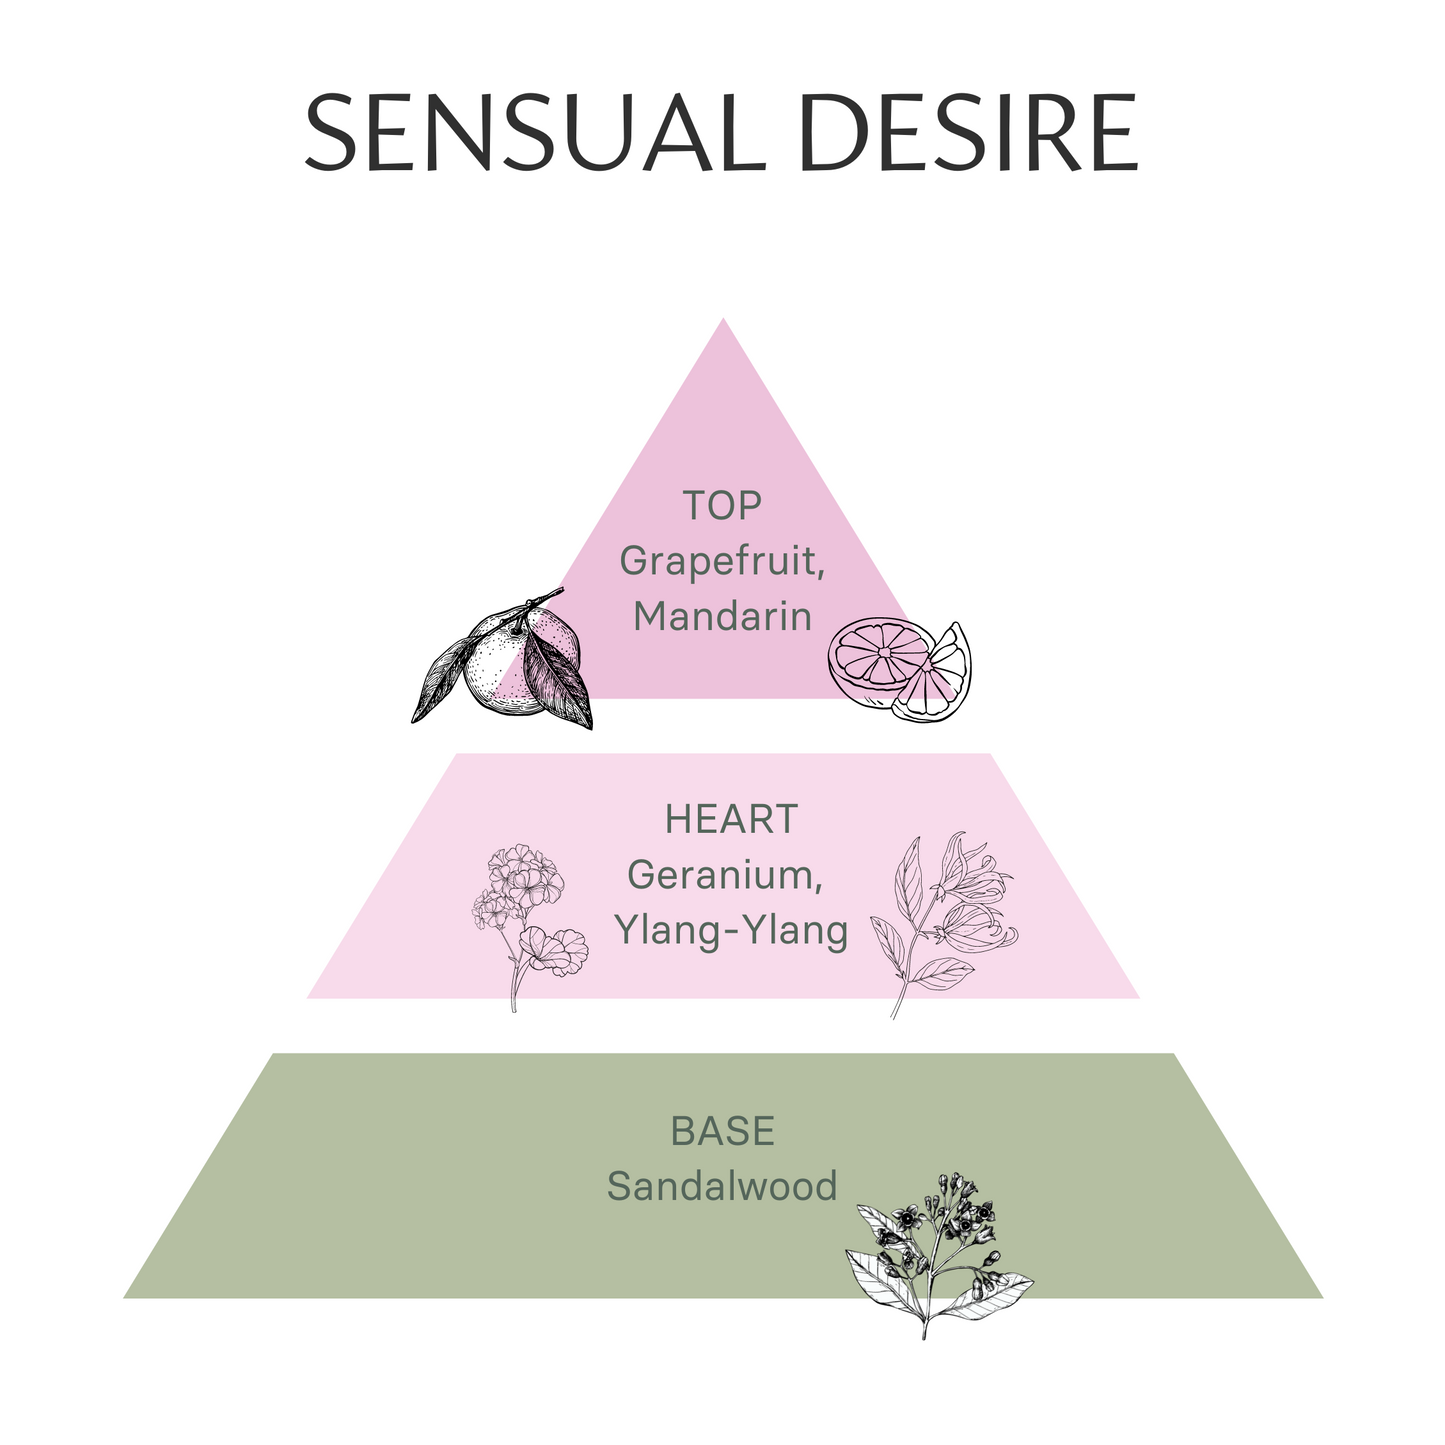 Ignite Passion with "Sensual Desire" Aromatherapy Candle: Geranium, Grapefruit, Sandalwood, Mandarin & Ylang-Ylang